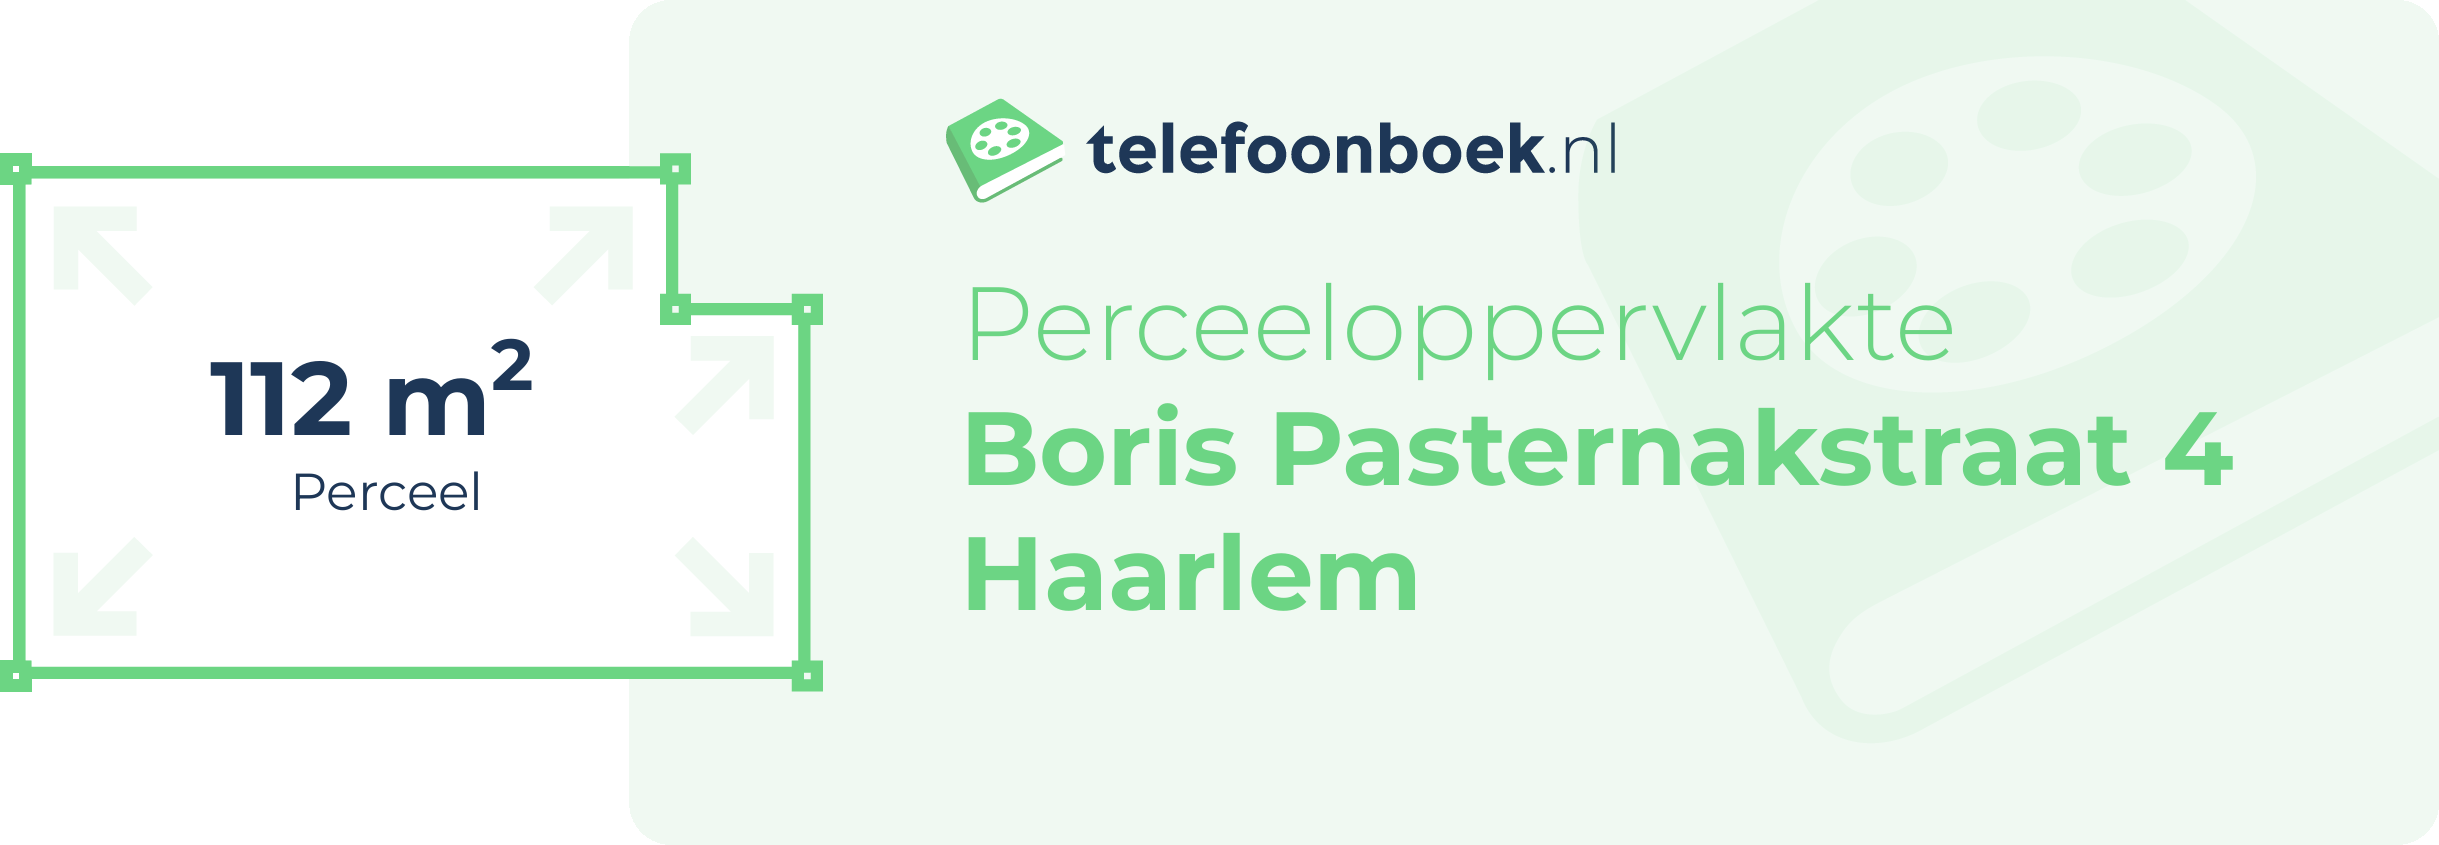 Perceeloppervlakte Boris Pasternakstraat 4 Haarlem